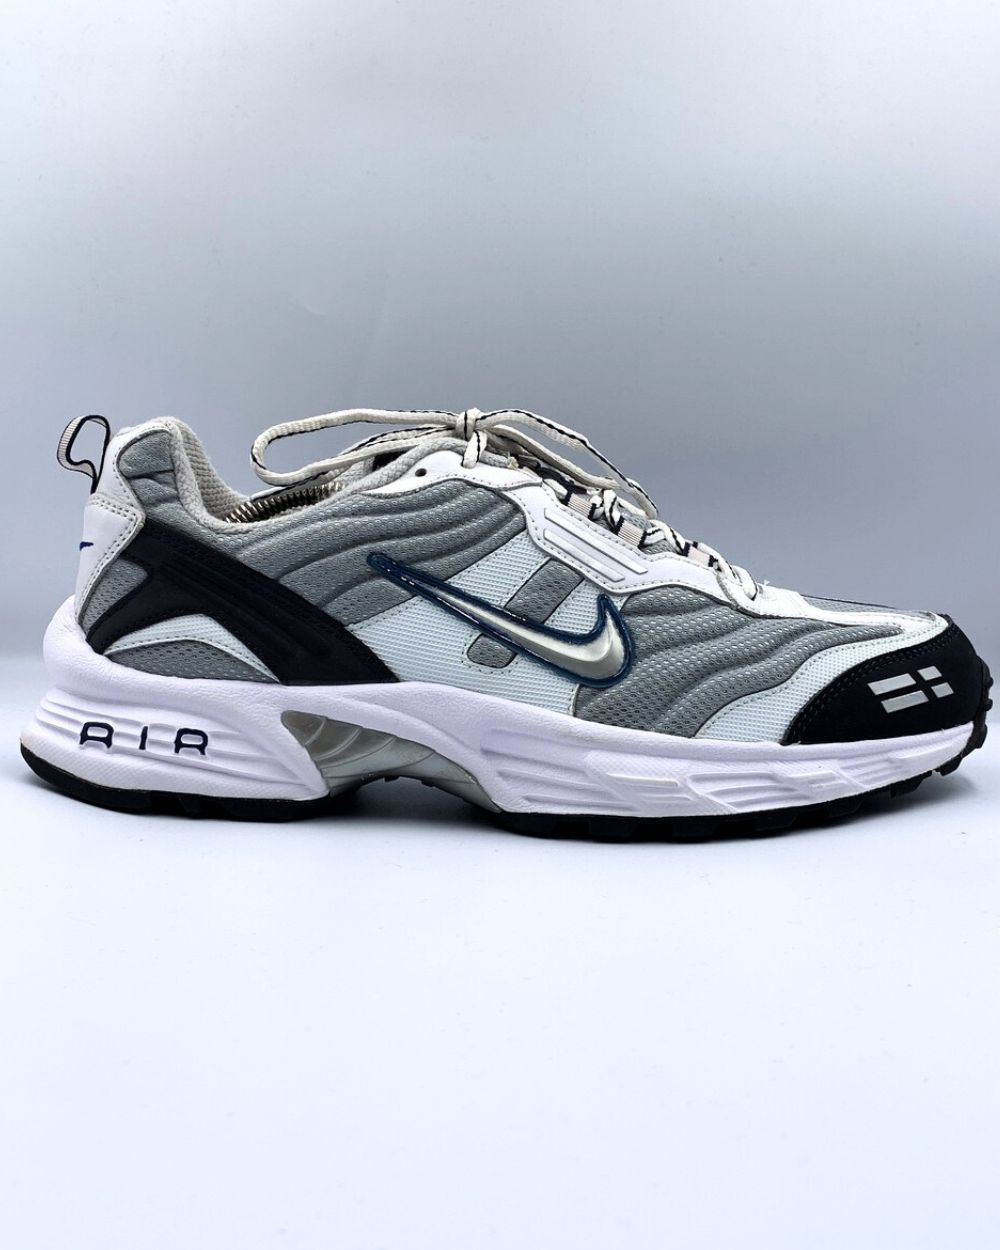 Nike Air Original Brand Sports White Running Shoes For Men